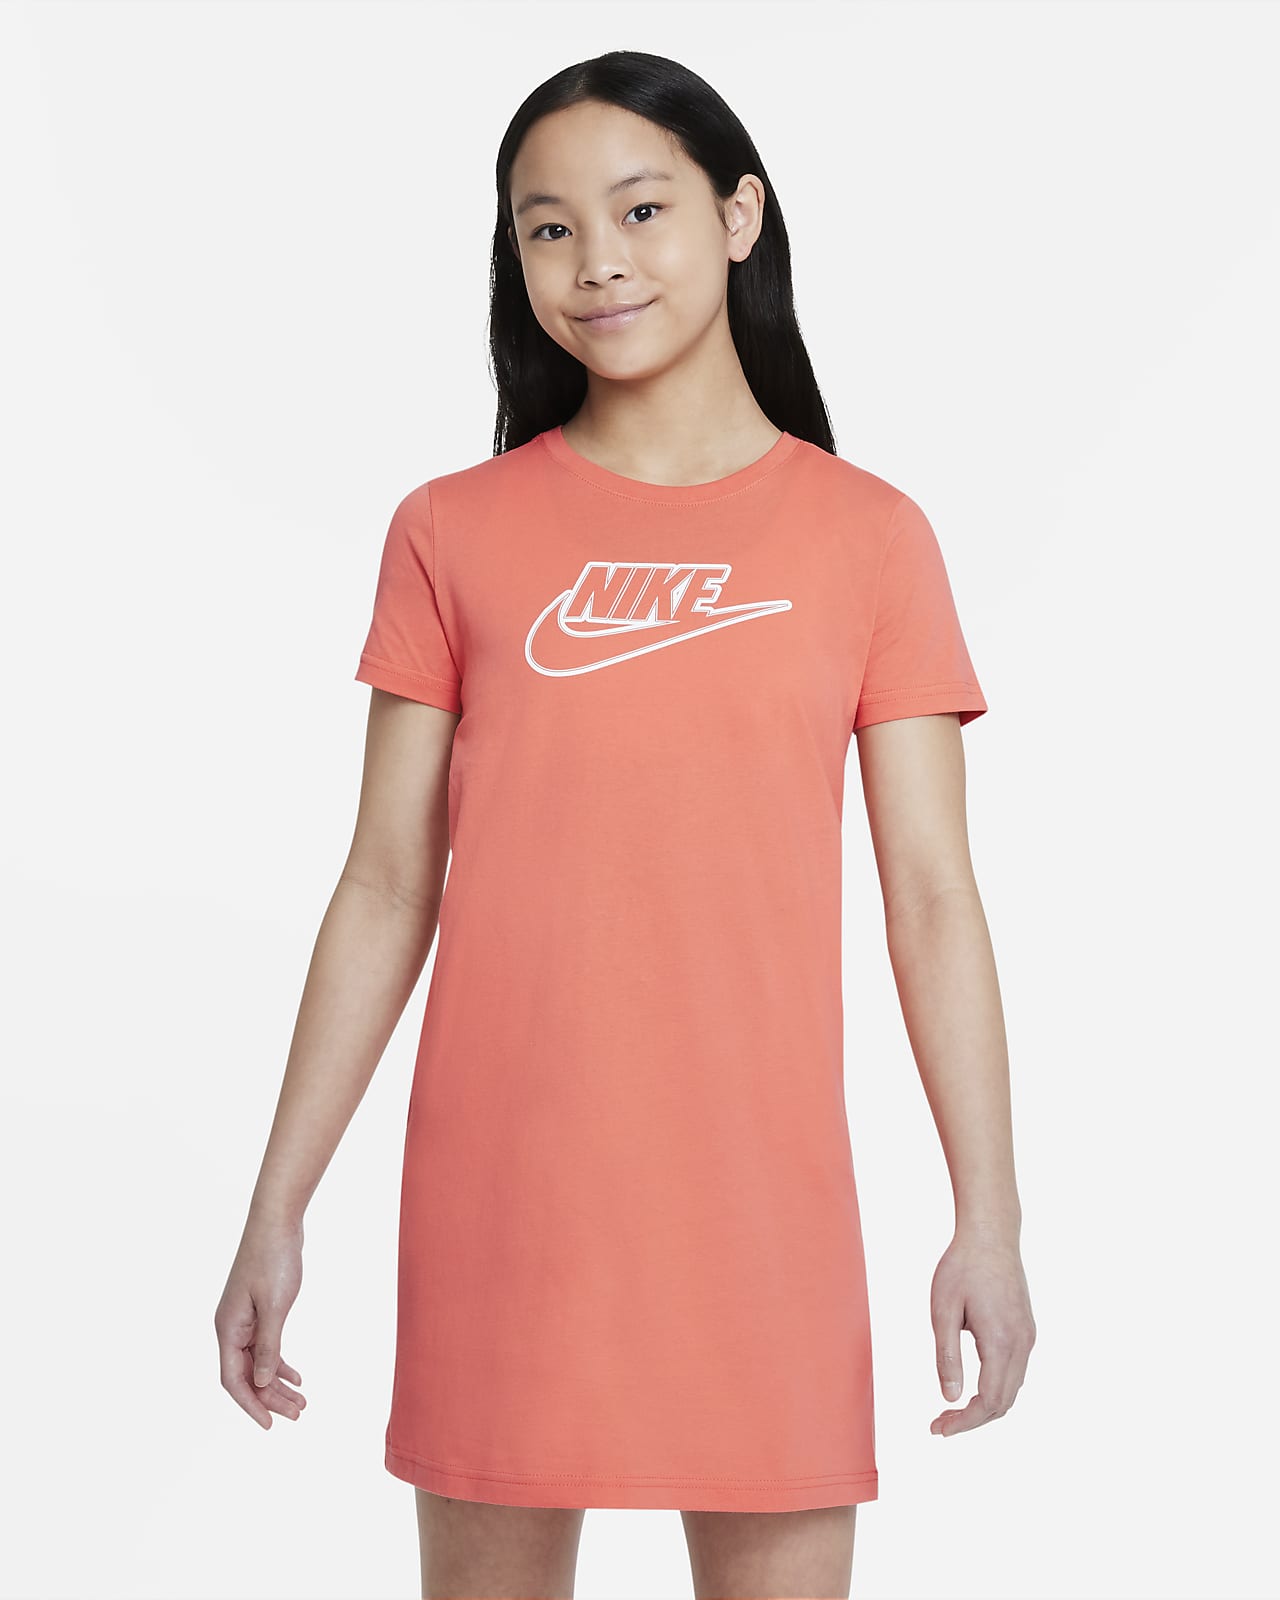 Nike Tee Shirt Hotsell, SAVE 52% -